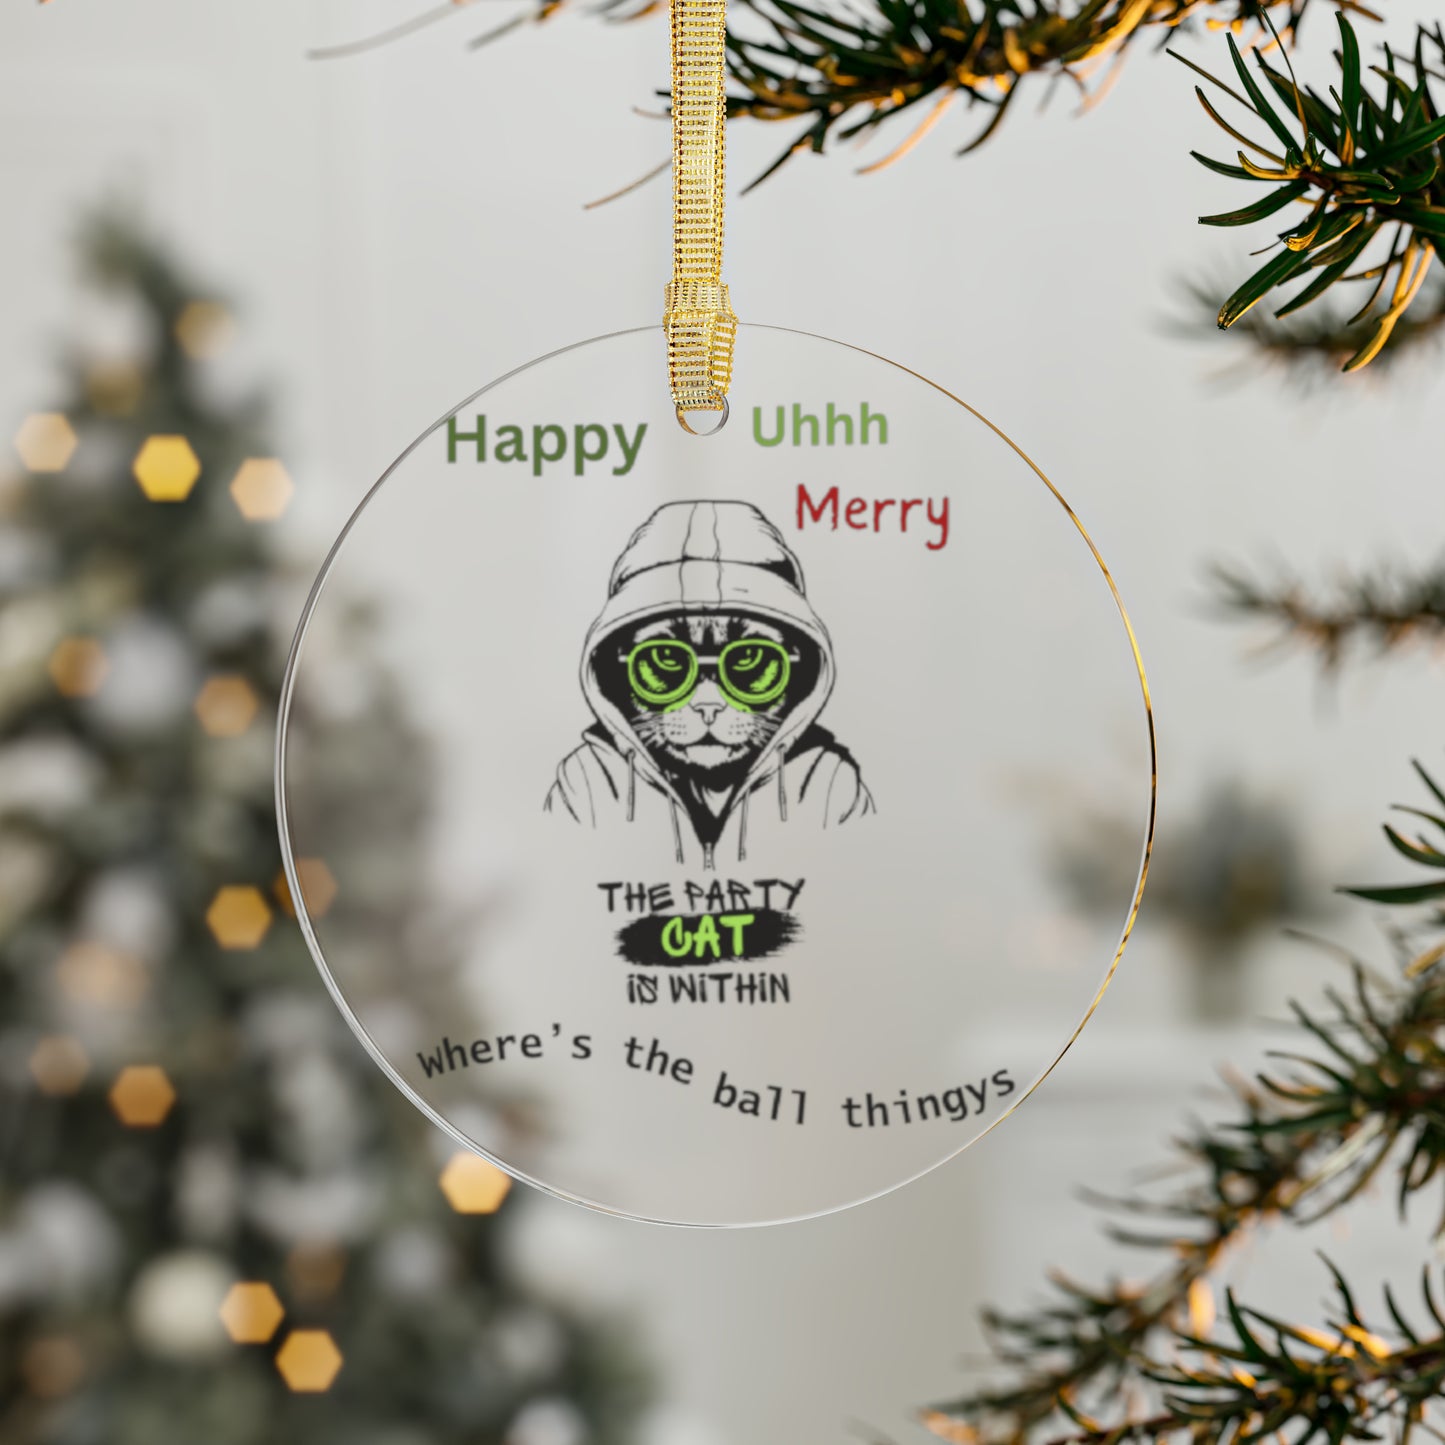 Happy Uhhh Merry Cat | Clear Acrylic Ornaments